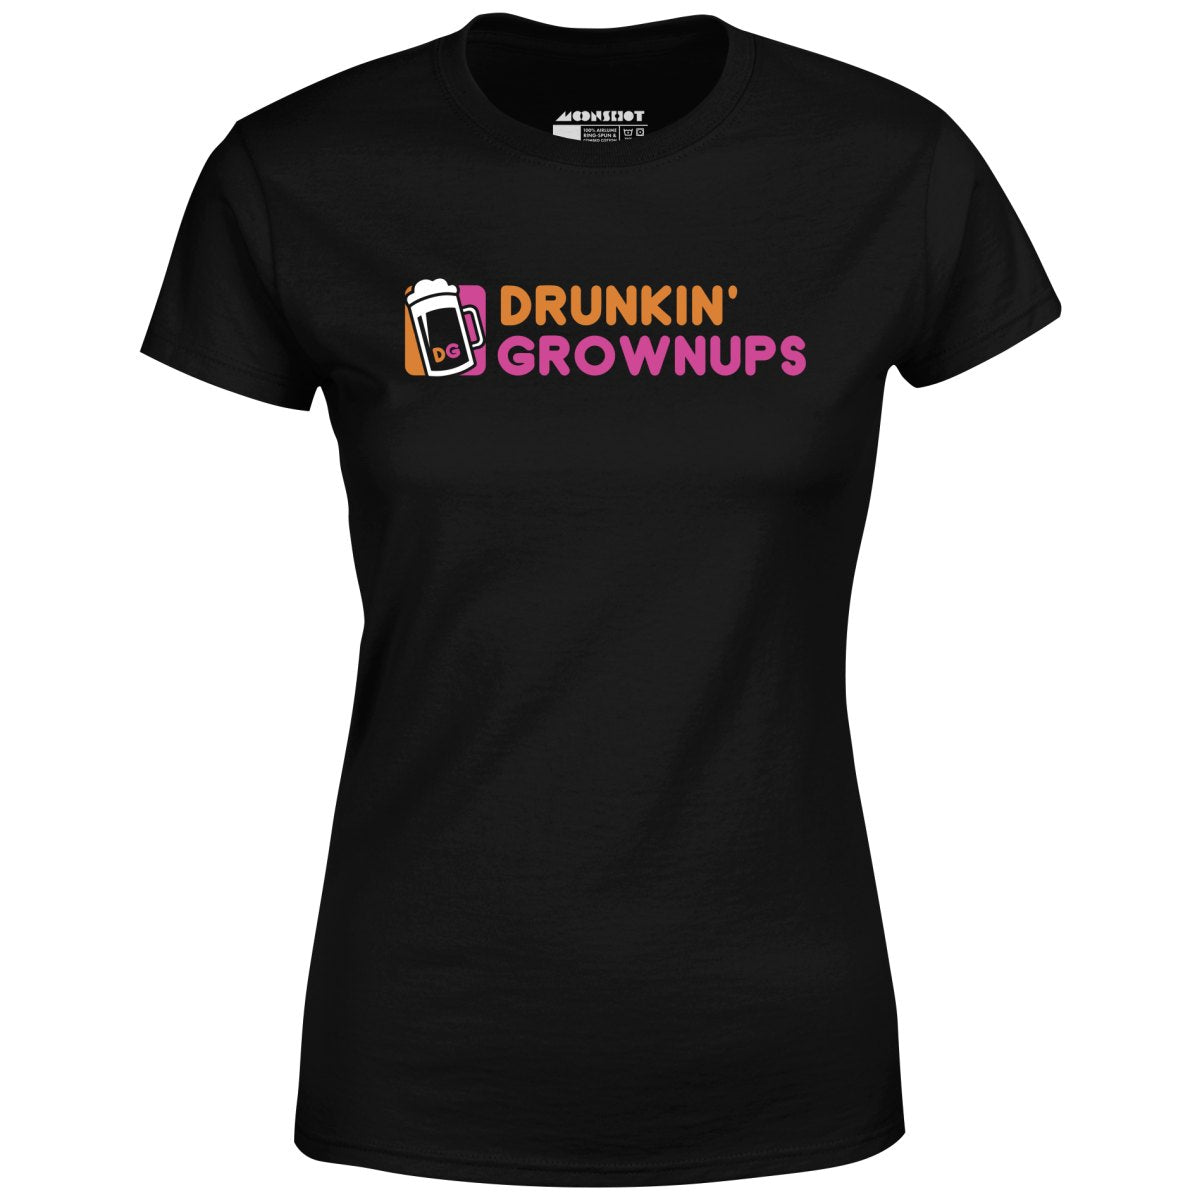 Drunkin' Grownups - Women's T-Shirt